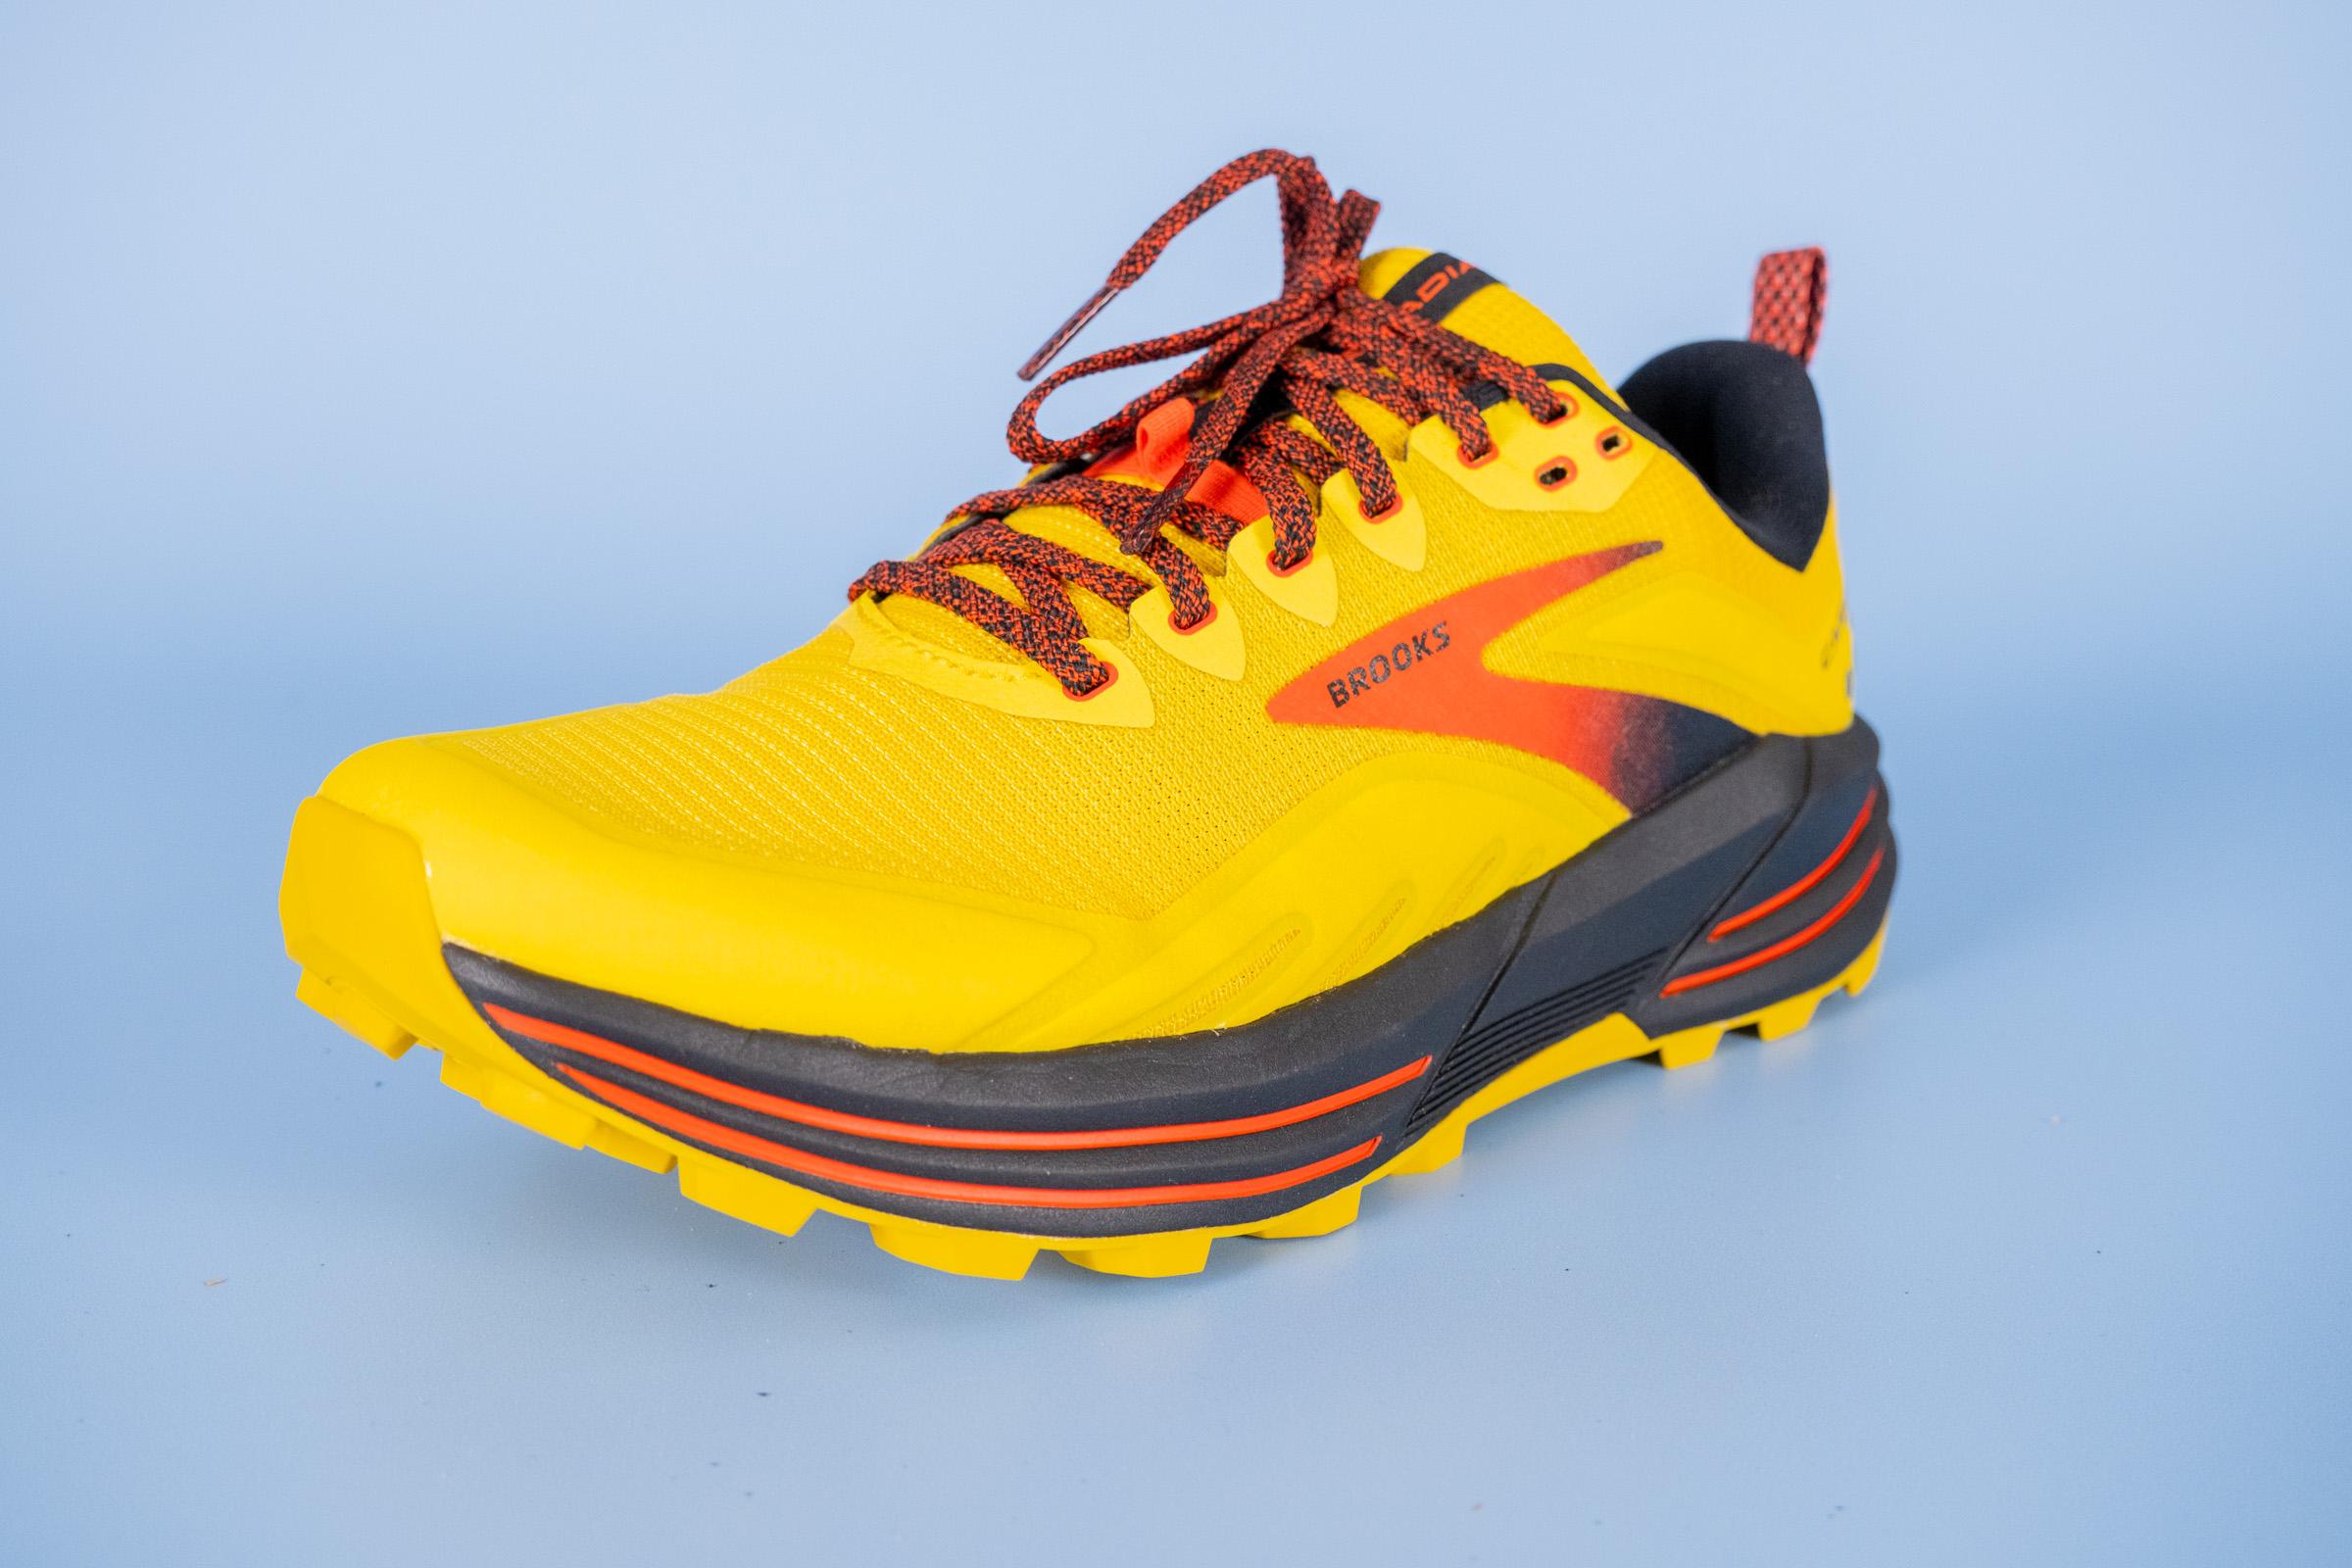 Brooks Cascadia 16 Men's Trail-Running Shoes | Brooks Running